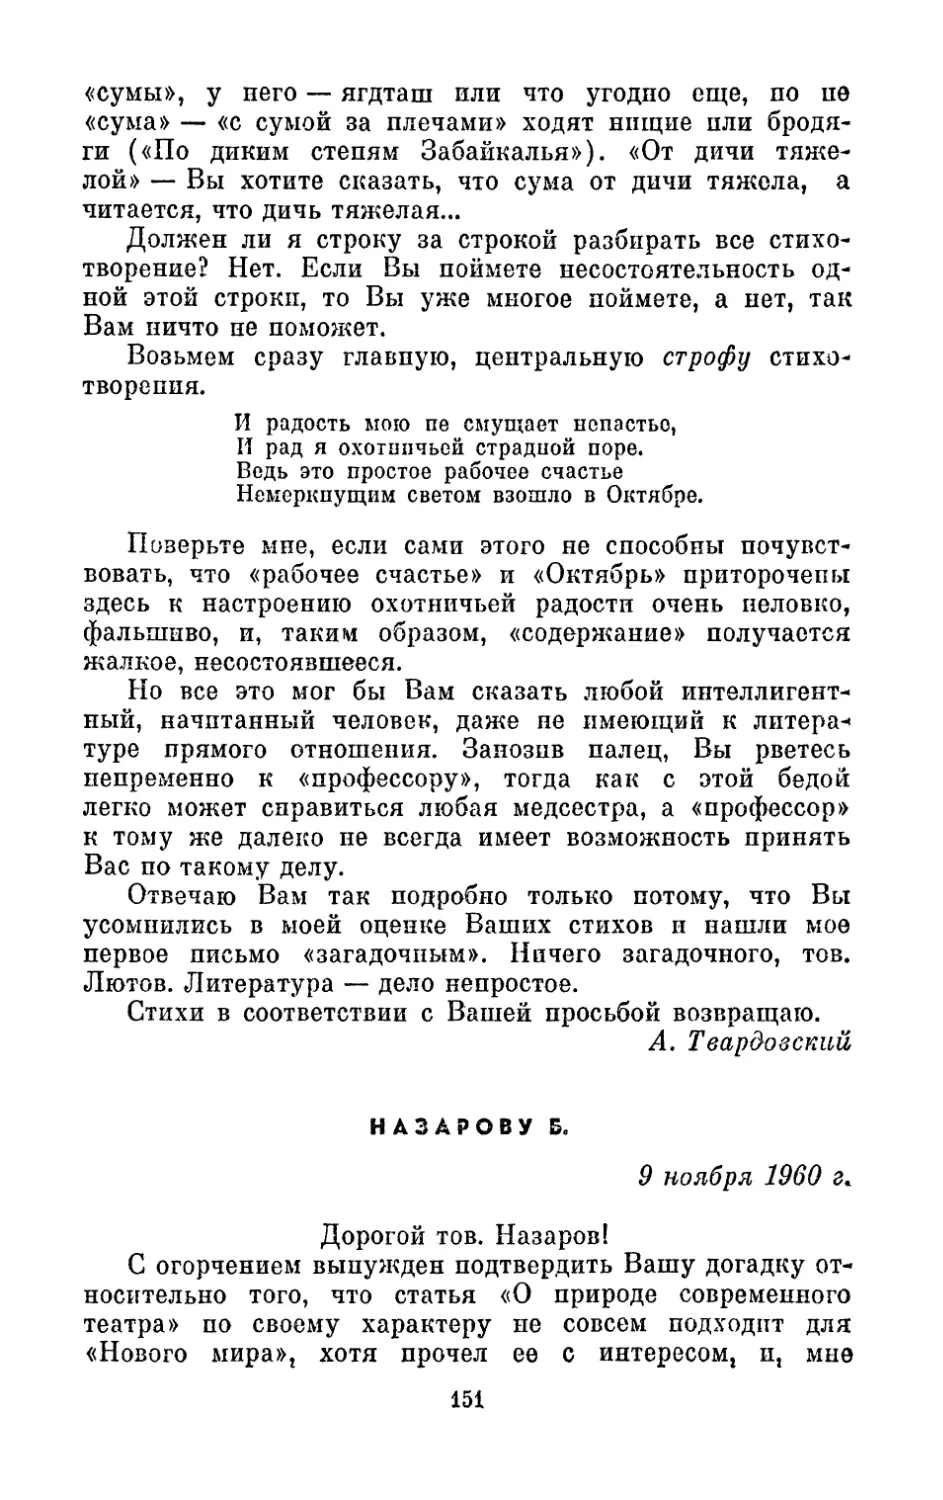 Назарову Б., 9 ноября 1960 г.